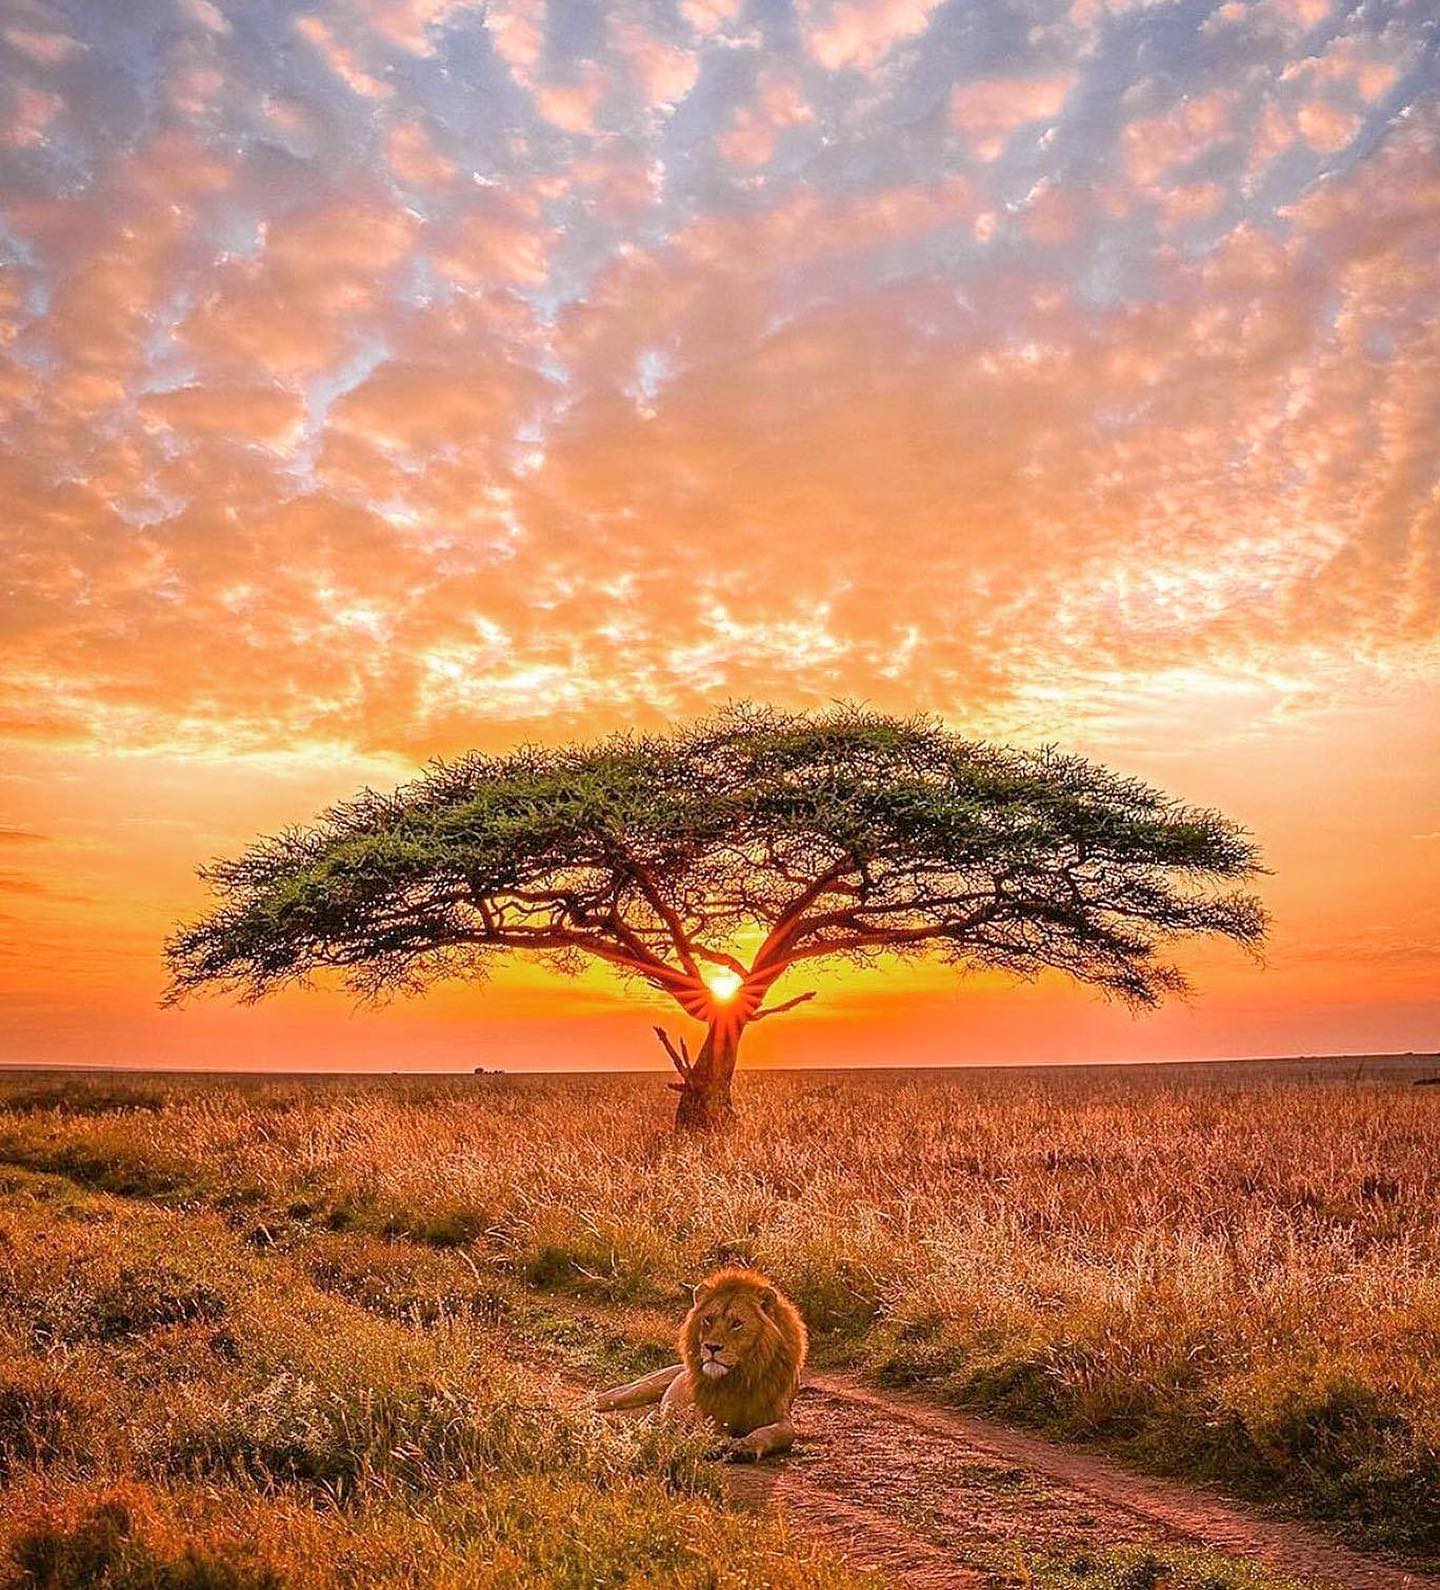 🇹🇿 【Tanzania 坦尚尼亞】塞倫提國家公園
🦁️一望無際草原與滿天雲彩下，雄偉的公獅盤據草原一角。獨特的非洲麵包樹背後隱藏著下沉的夕陽。
❤️旅遊聖經Lonely Planet孤獨星球稱坦尚尼亞為『The land of Safari』動物獵遊國度，最大的塞倫蓋提野生動物保育區，面積有近台灣八倍大。
🦁️Safari通常是請有經驗的當地駕駛，在廣大的塞倫蓋提草原，尋找動物原始生活的蹤跡，又稱game drive
📸credit@agpfoto

🌏#africa #Tanzania #safari #gamedrive #serengeti #東非 #坦尚尼亞 #動物獵遊 #travelwithmikeanna #把世界當教室🌍